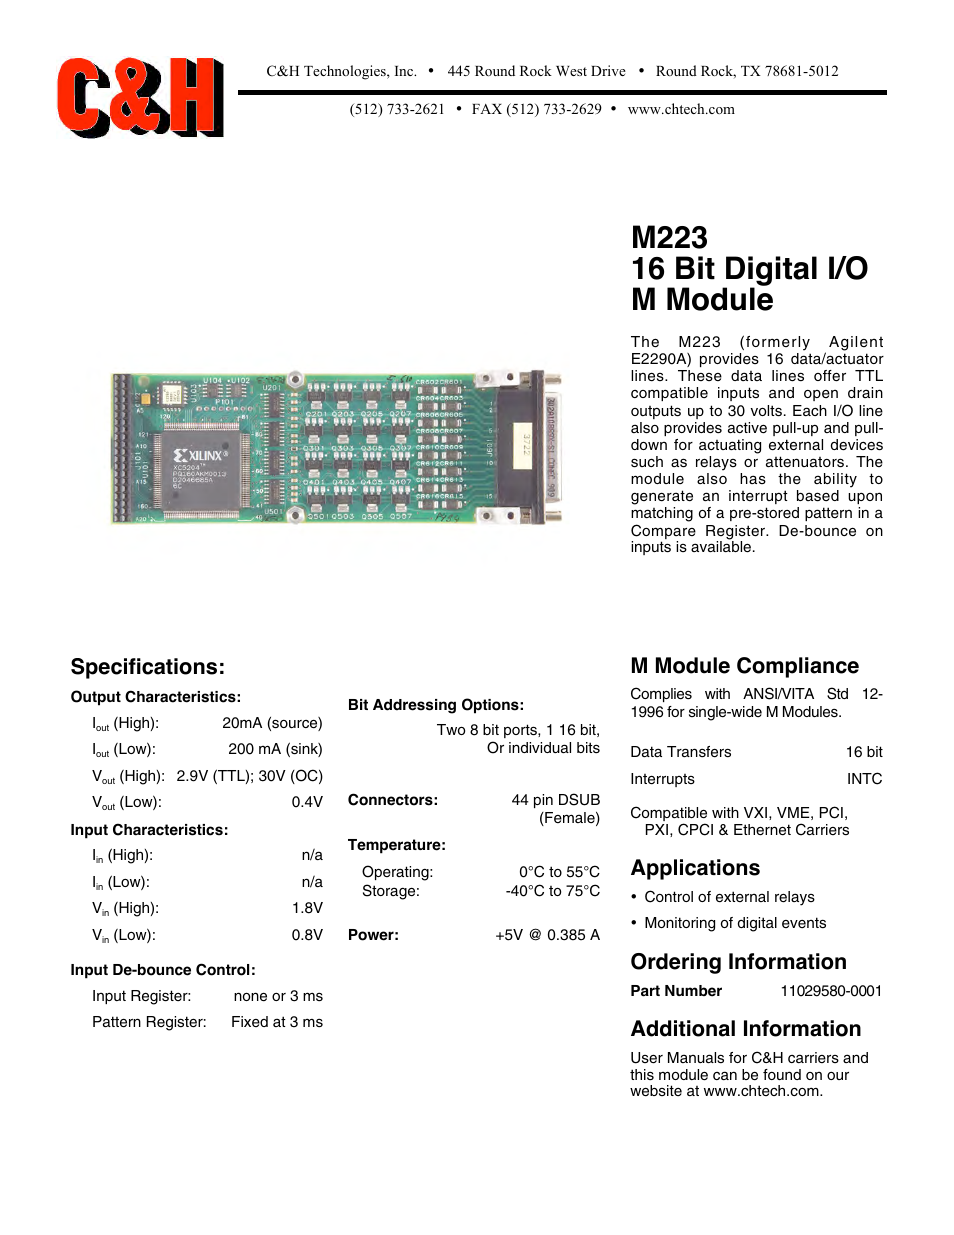 C&H Technologies 16 Bit Digital I/O M Module M223 User Manual | 1 page